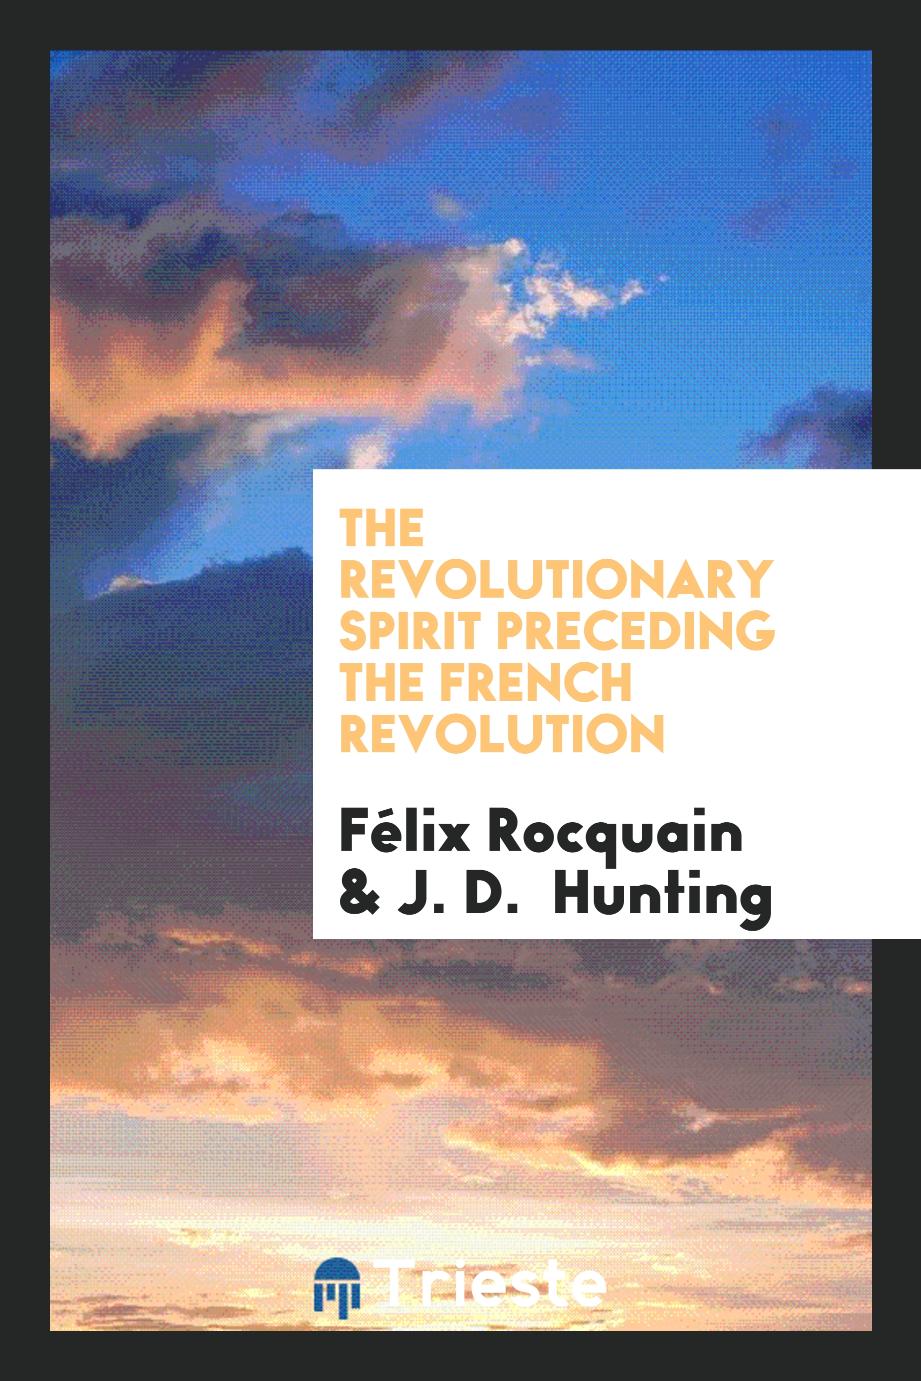 The revolutionary spirit preceding the French revolution